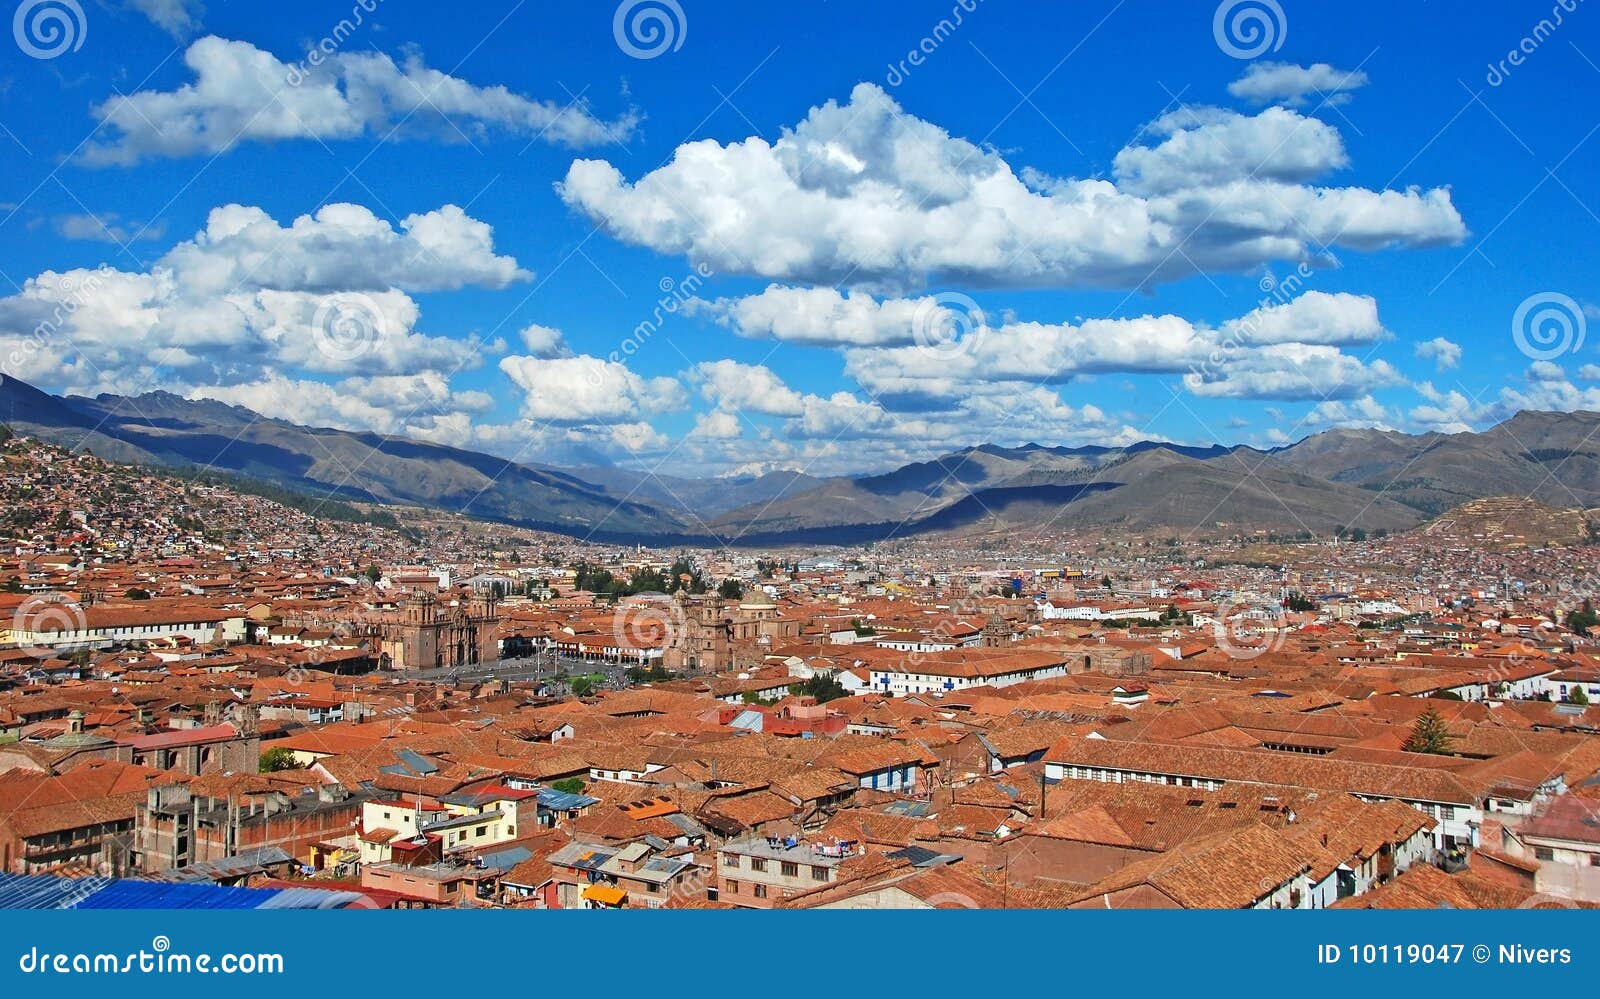 city of cuzco